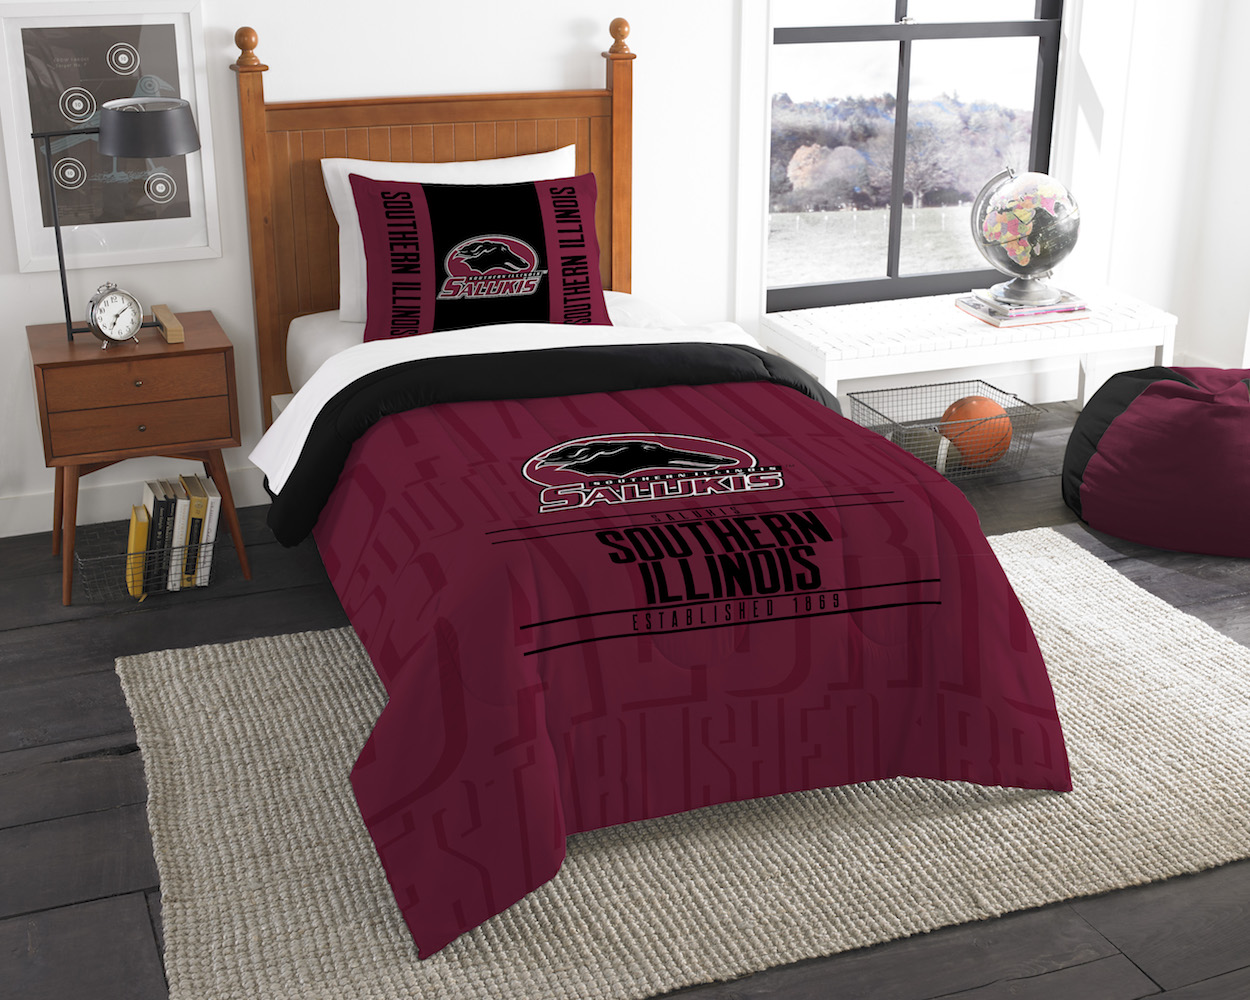 Southern Illinois Salukis Twin Comforter Set with Sham